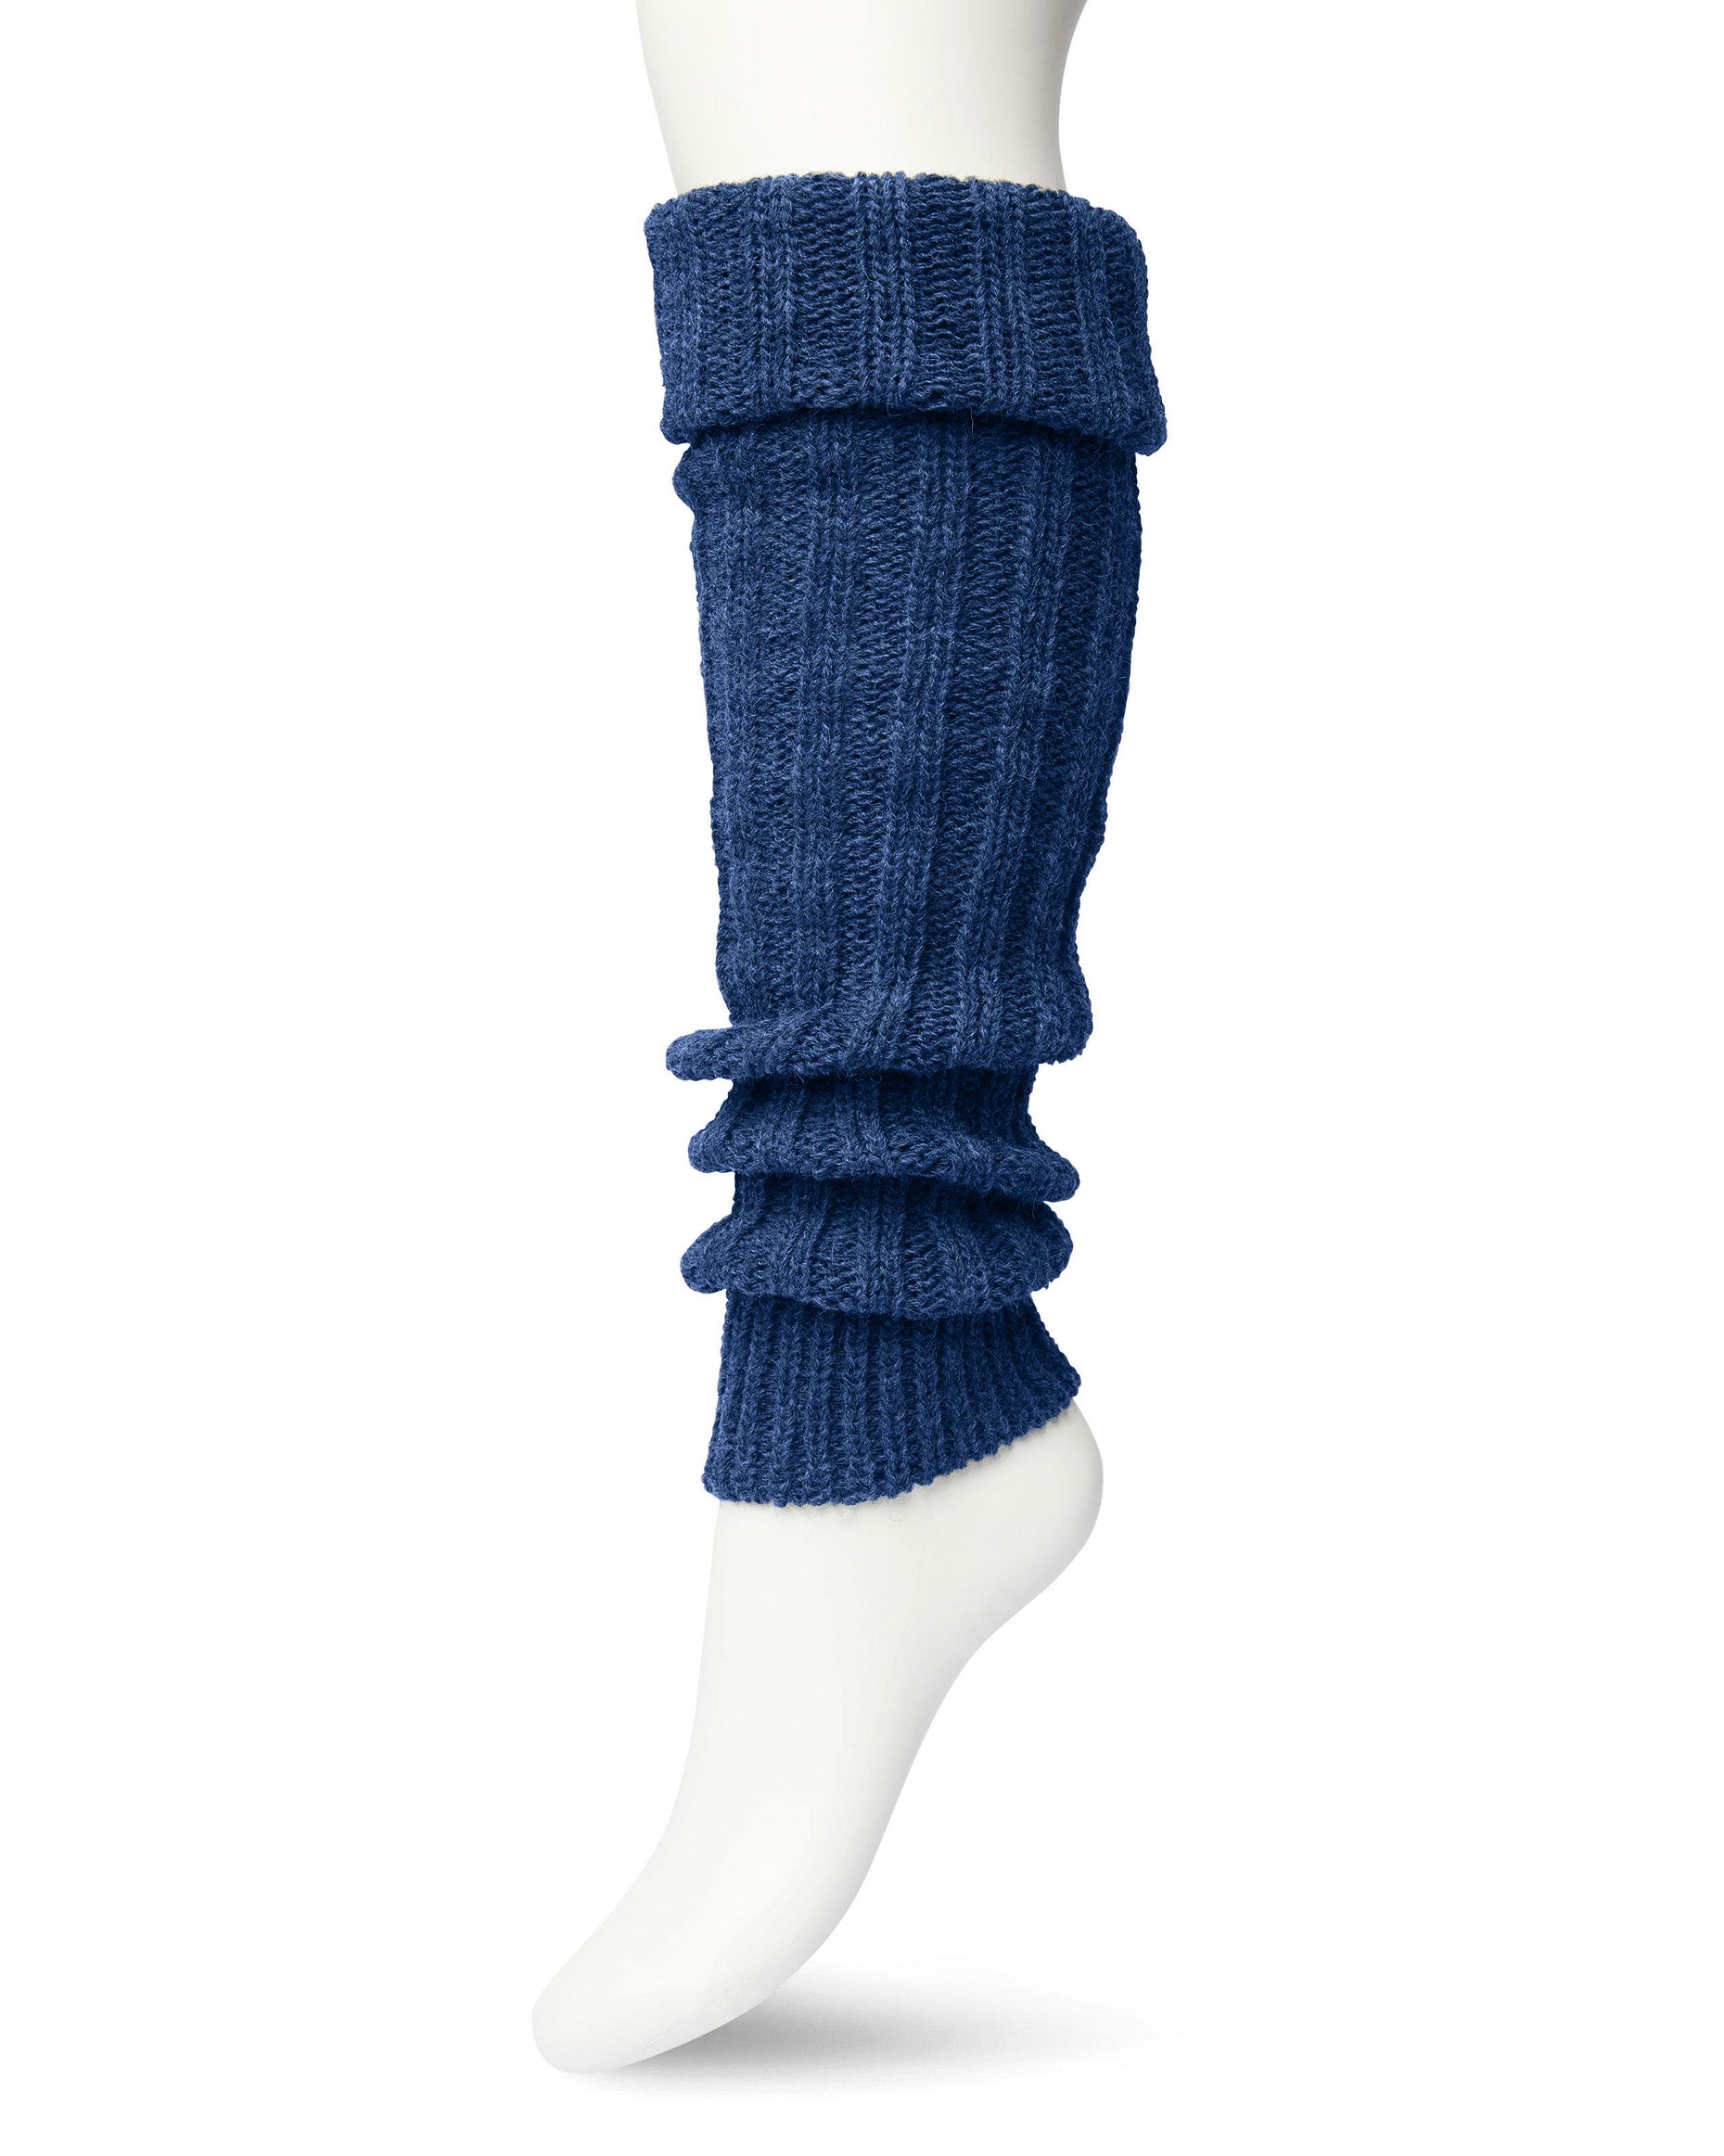 Bonnie Doon Sleever/Legwarmer BE021766 - denim blue wool mix chunky knitted leg warmers